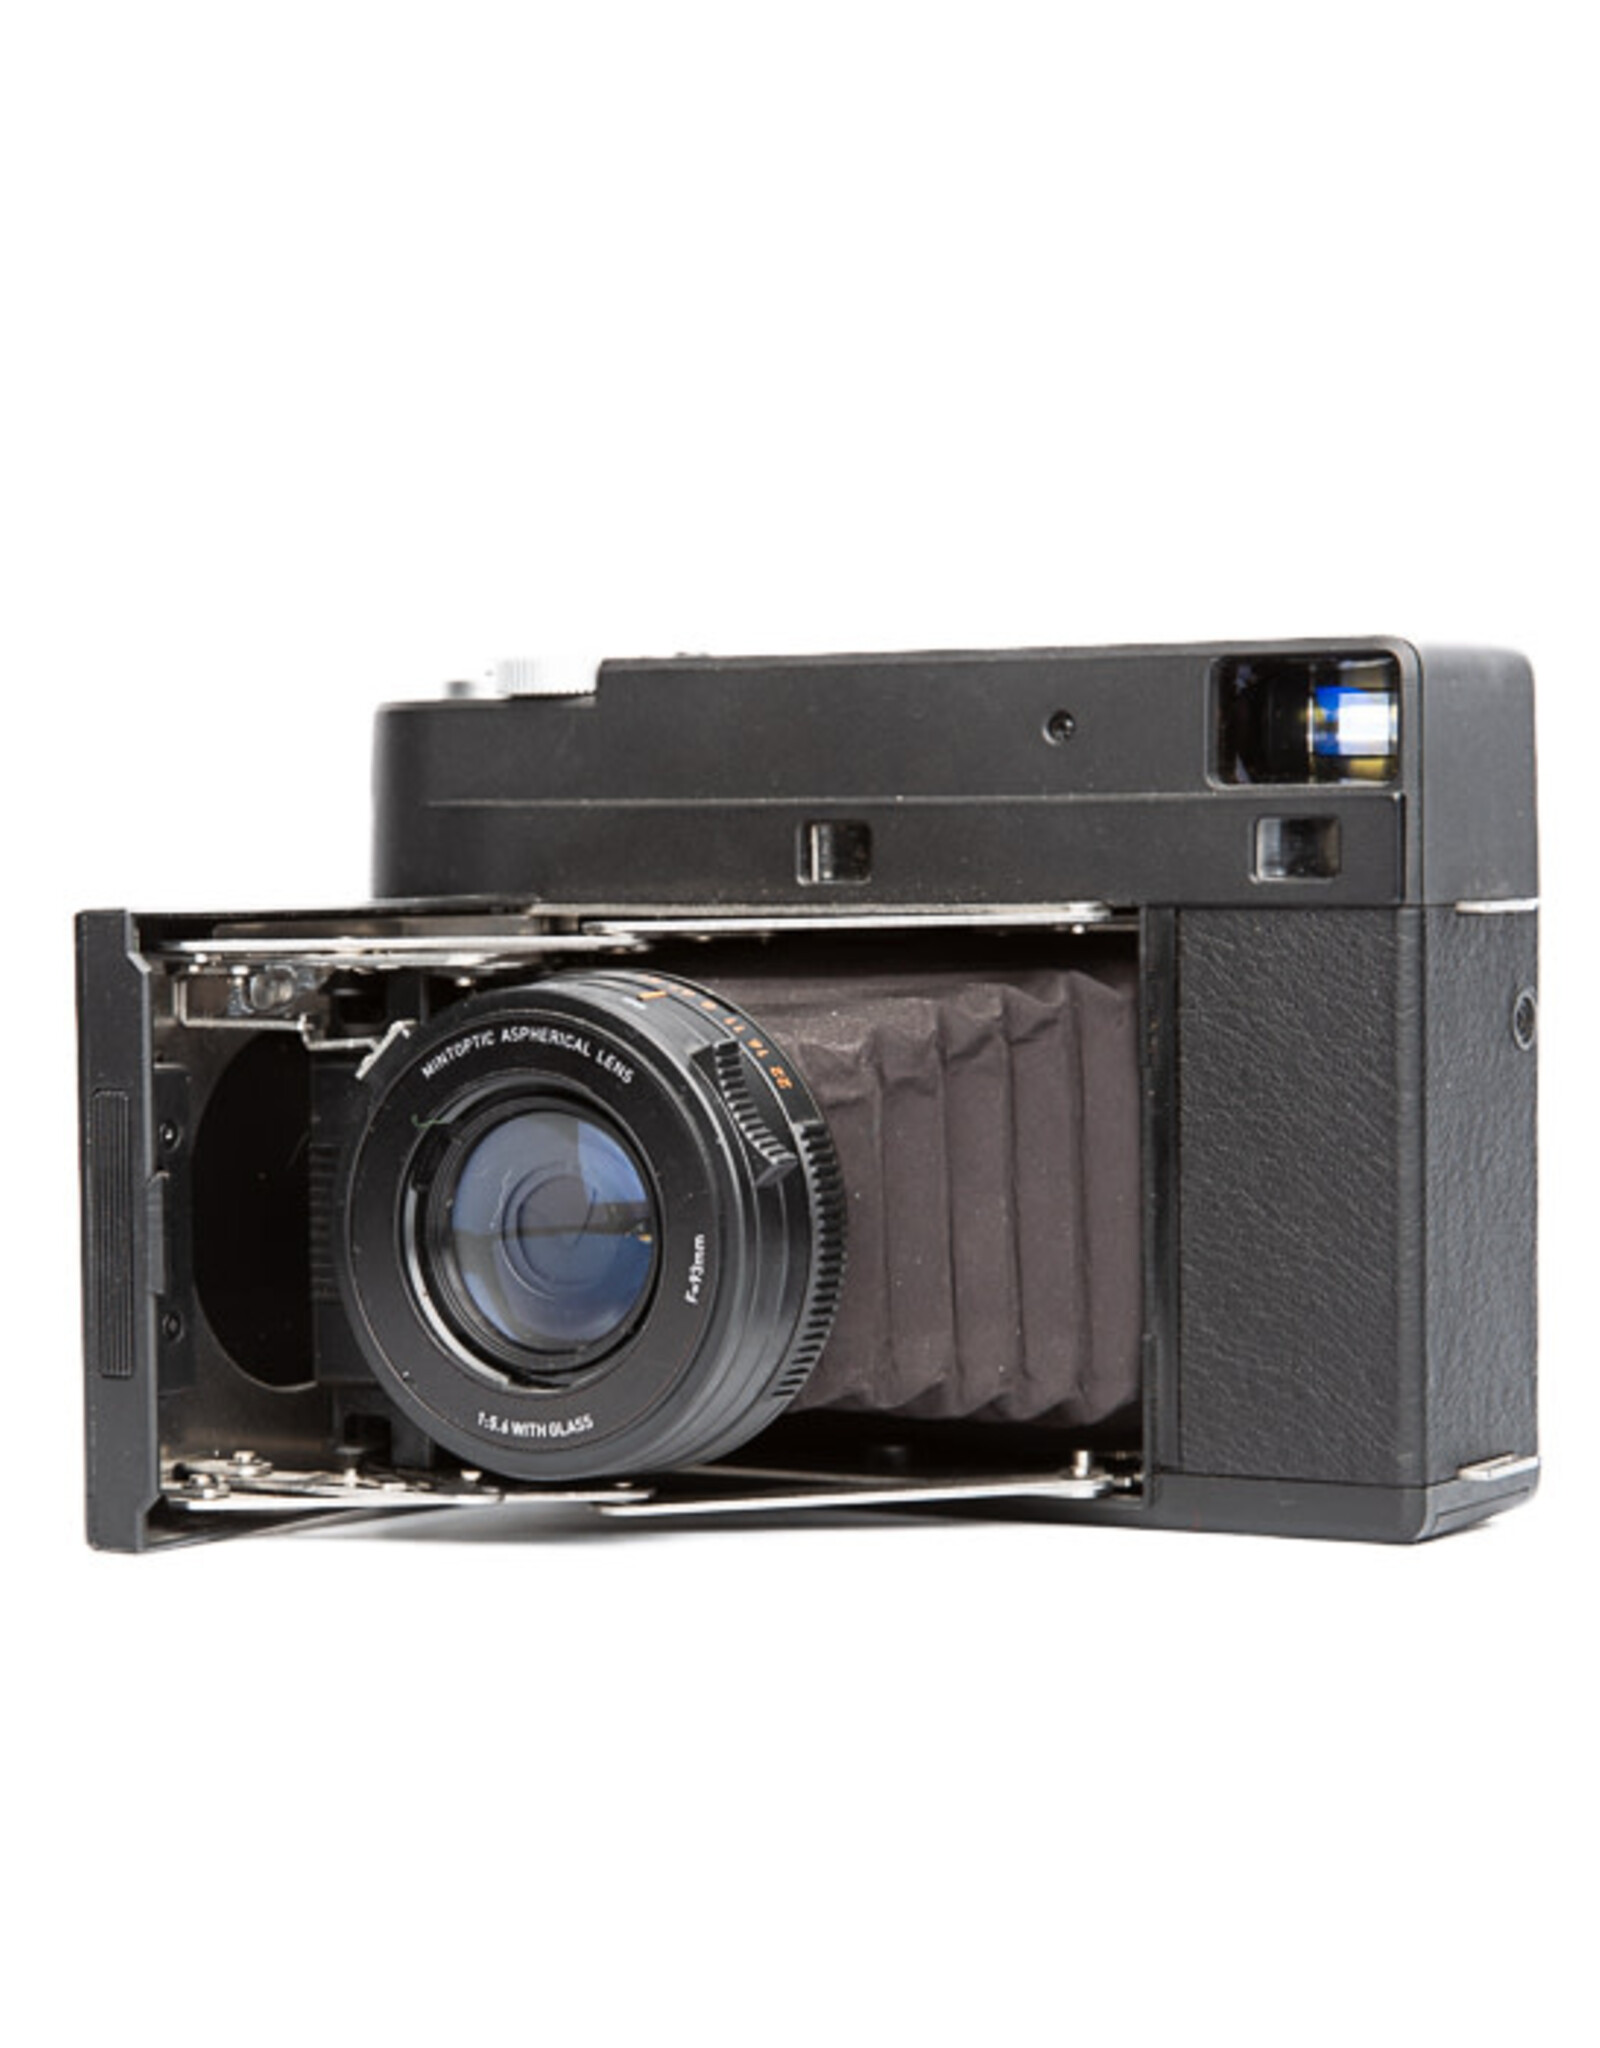 MiNT MiNT InstantKon RF70 Large Format Instant Camera